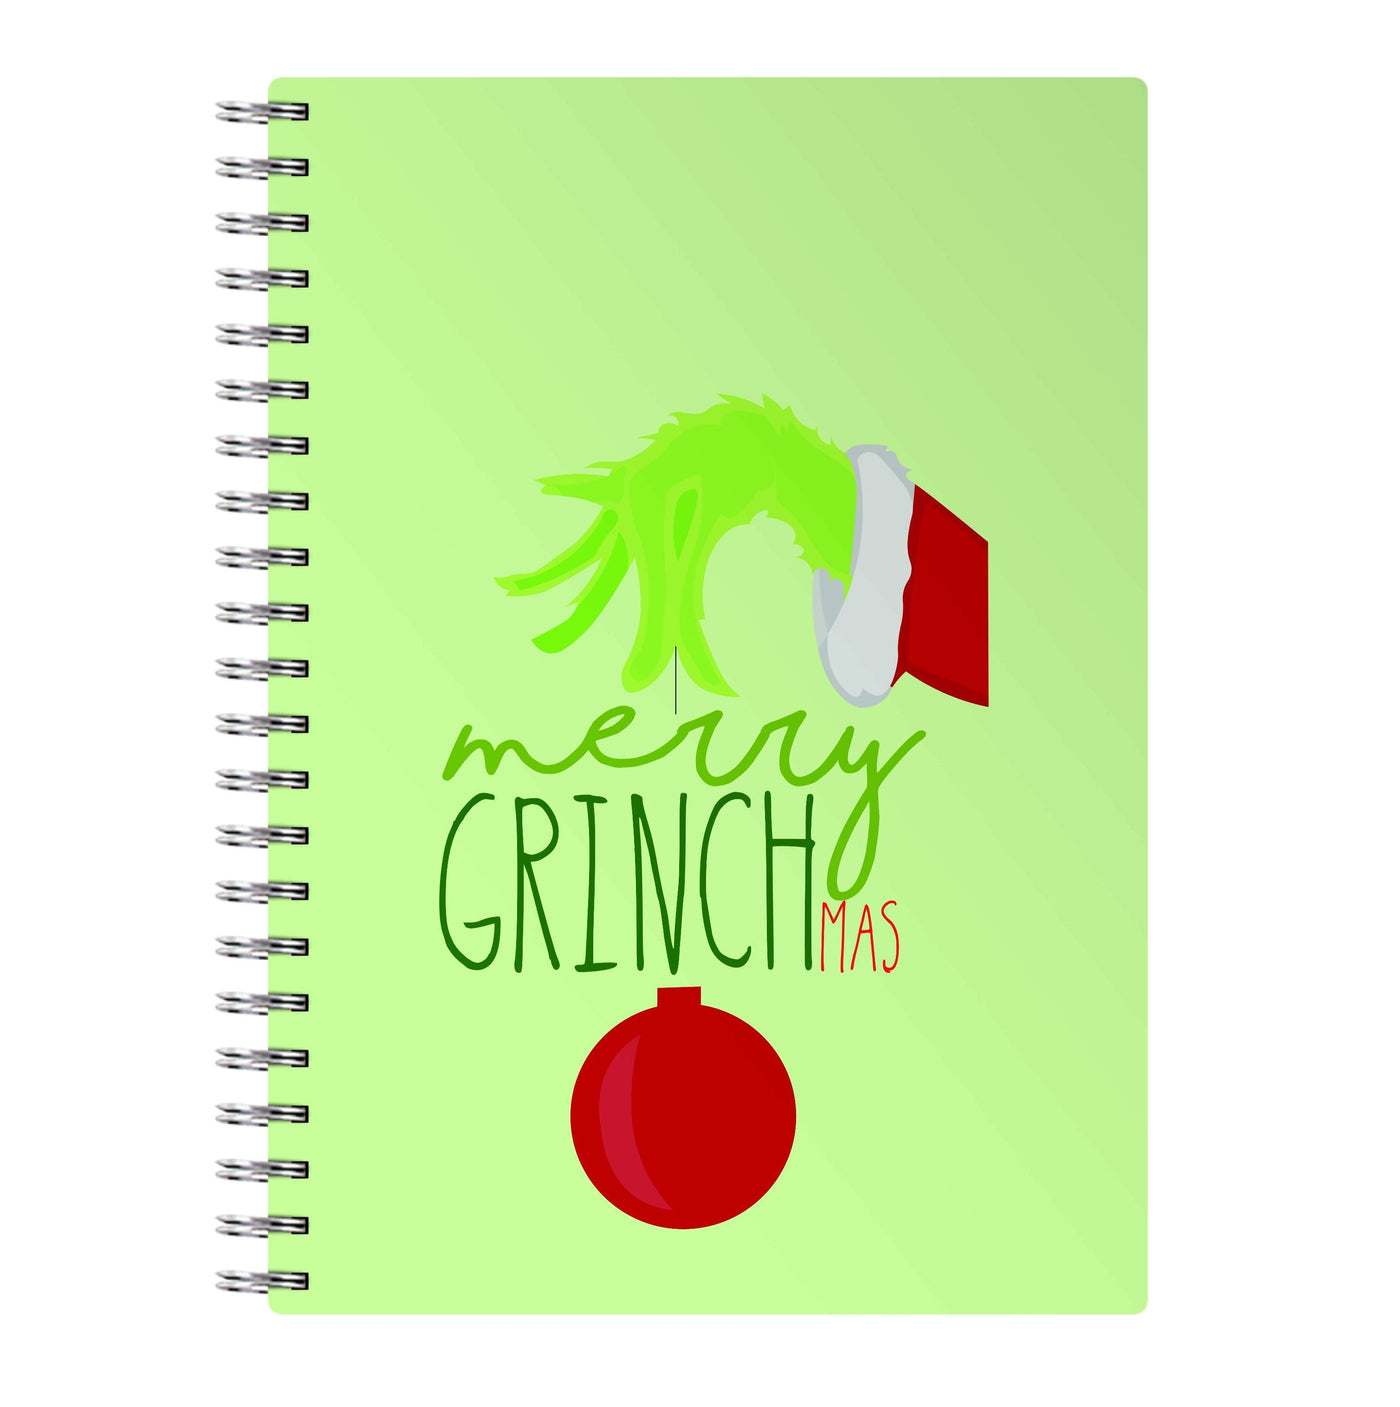 Merry GrinchMas - Grinch Notebook